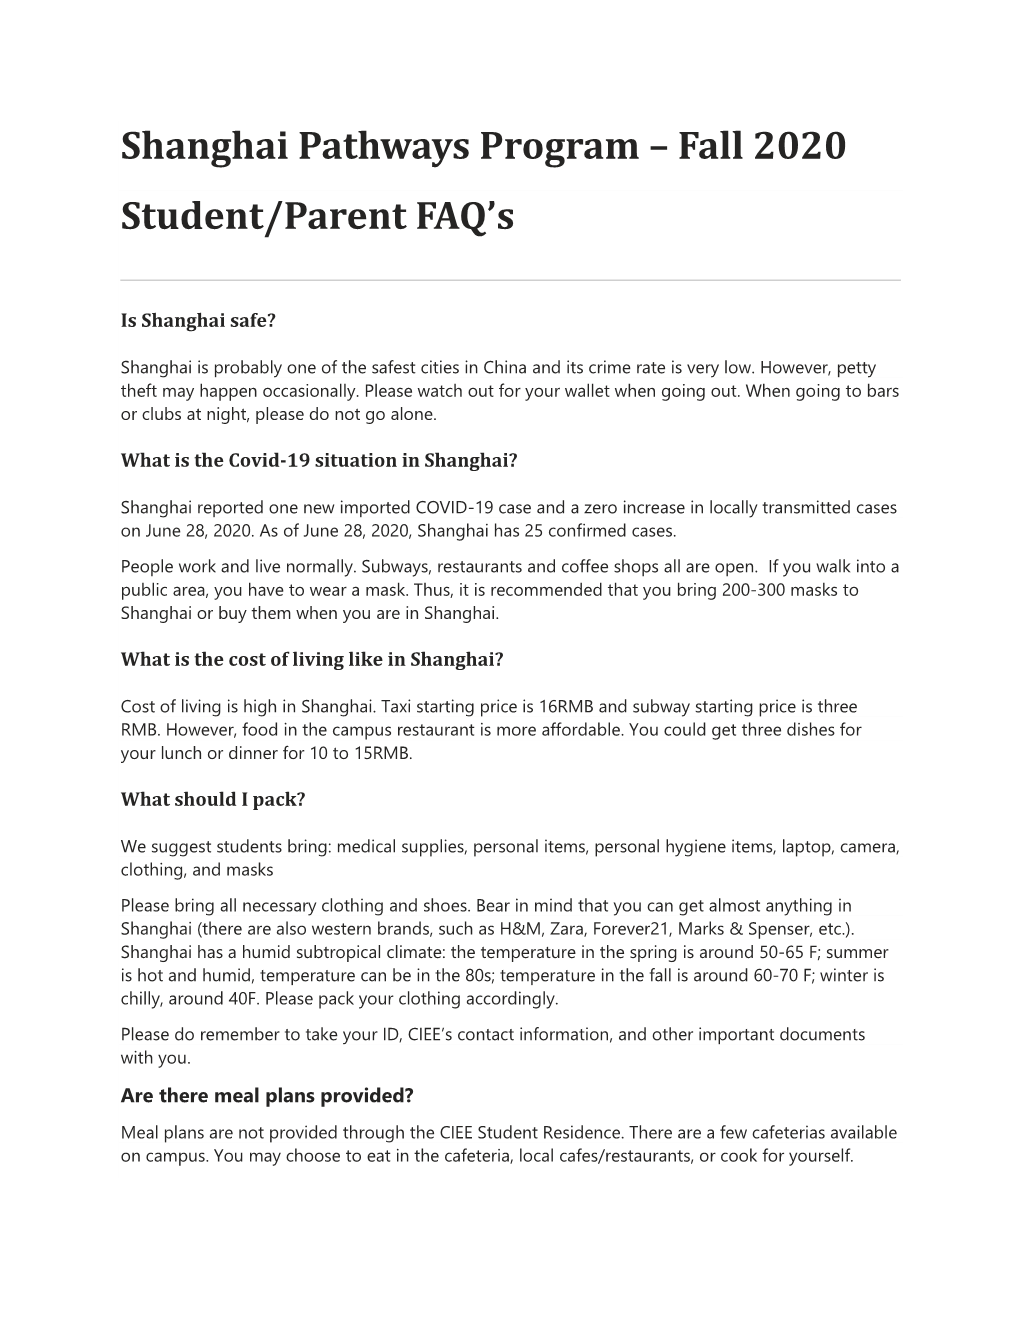 Shanghai Pathways Program – Fall 2020 Student/Parent FAQ's